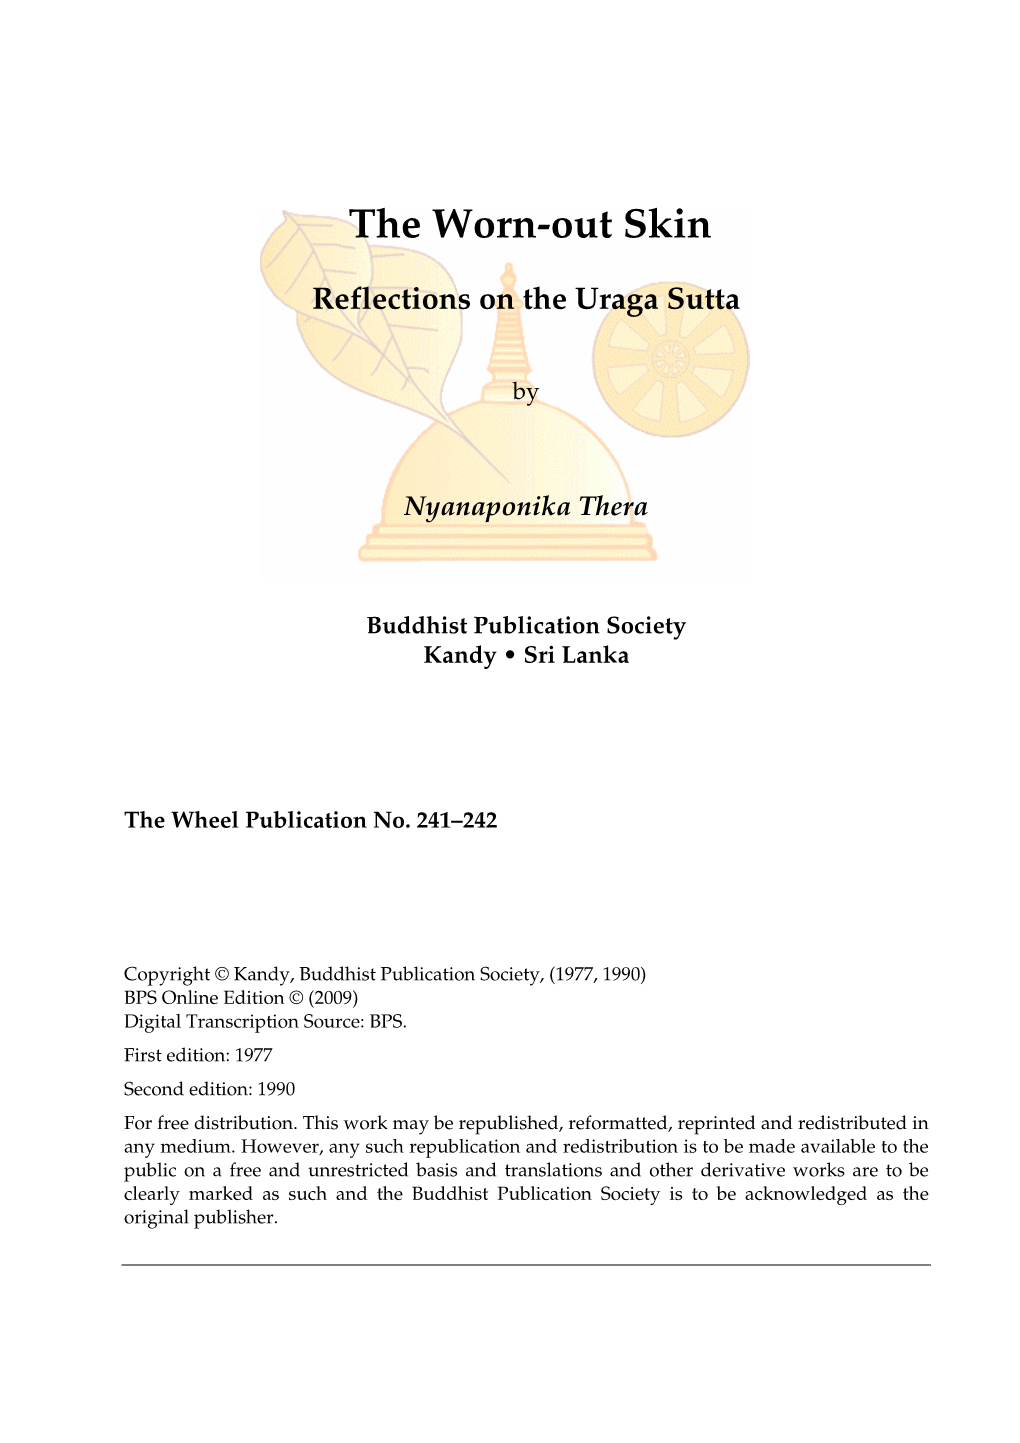 The Worn-Out Skin: Reflectinos on the Uraga Sutta